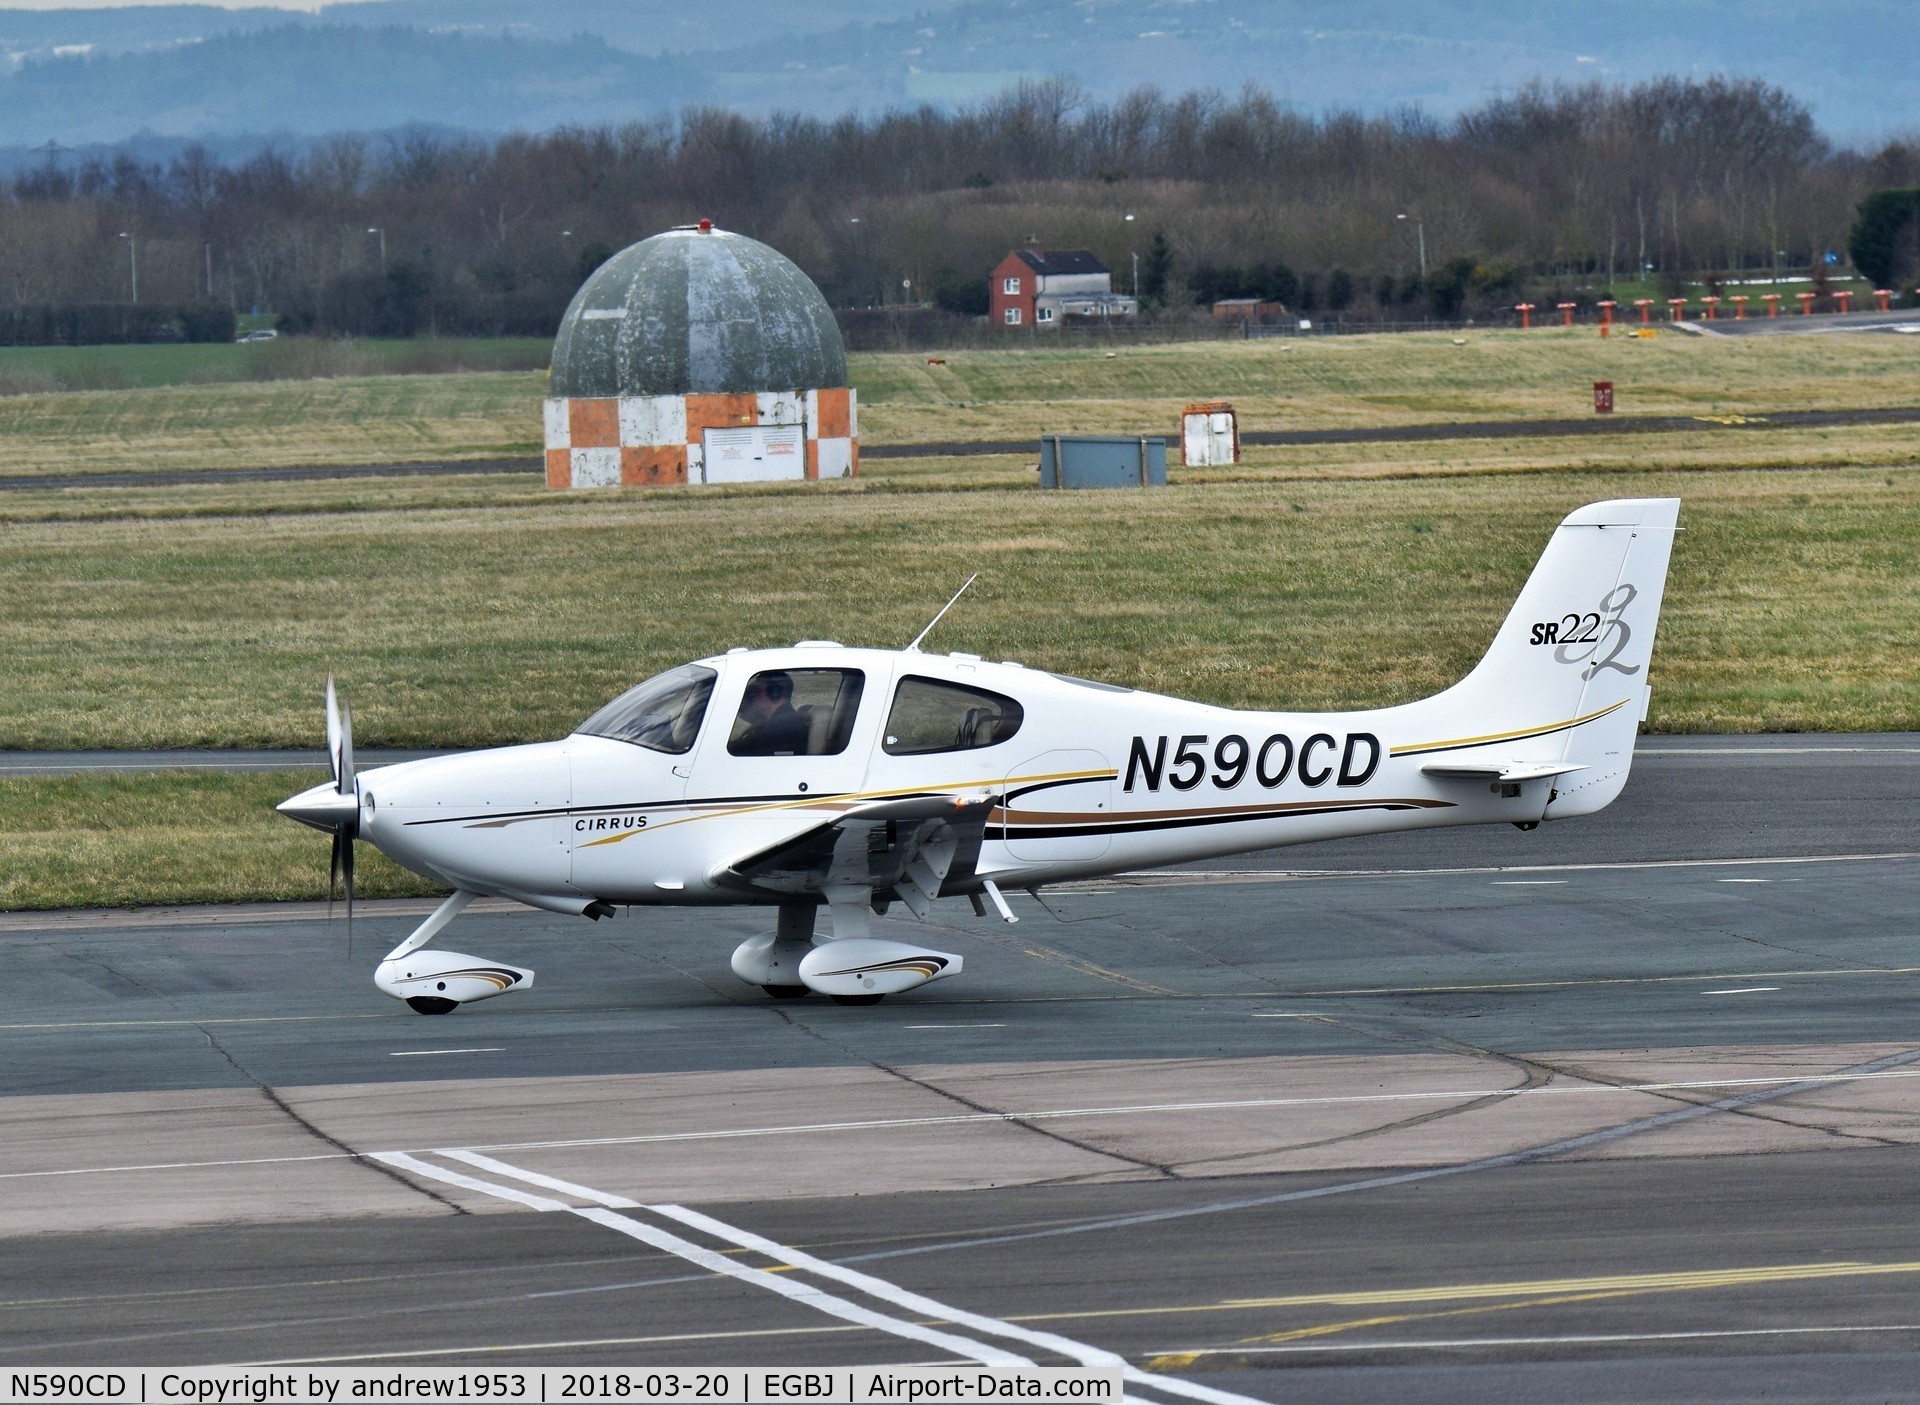 N590CD, 2004 Cirrus SR22 C/N 0957, N590CD at Gloucestershire Airport.